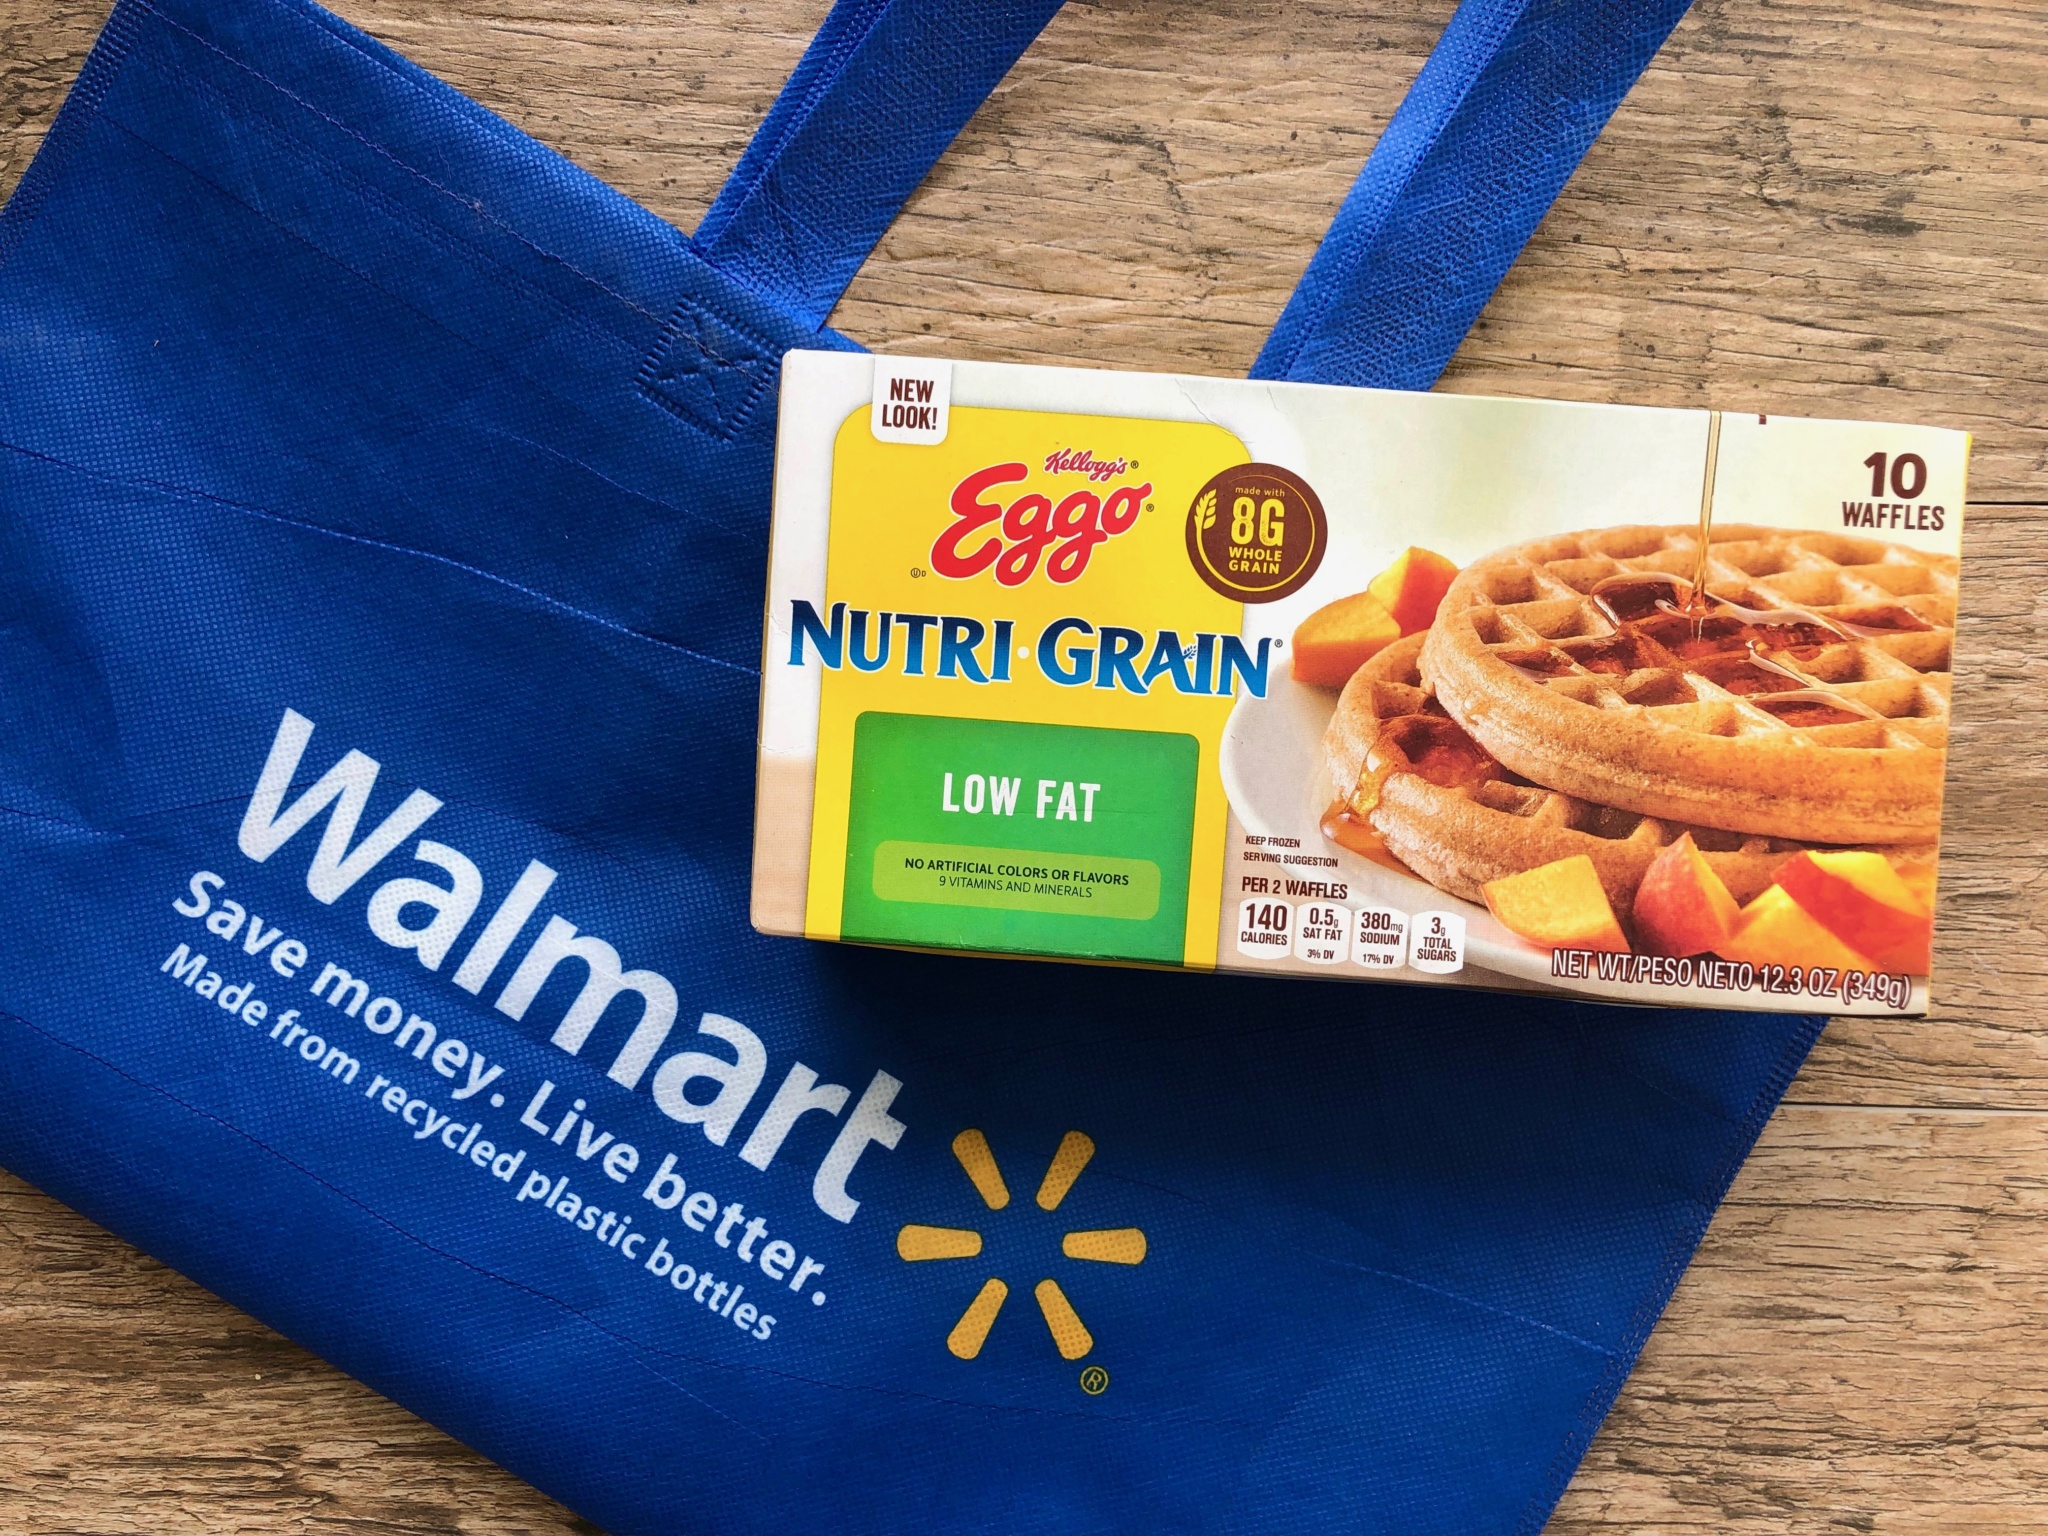 Eggo Nutri Grain low fat waffles at Walmart